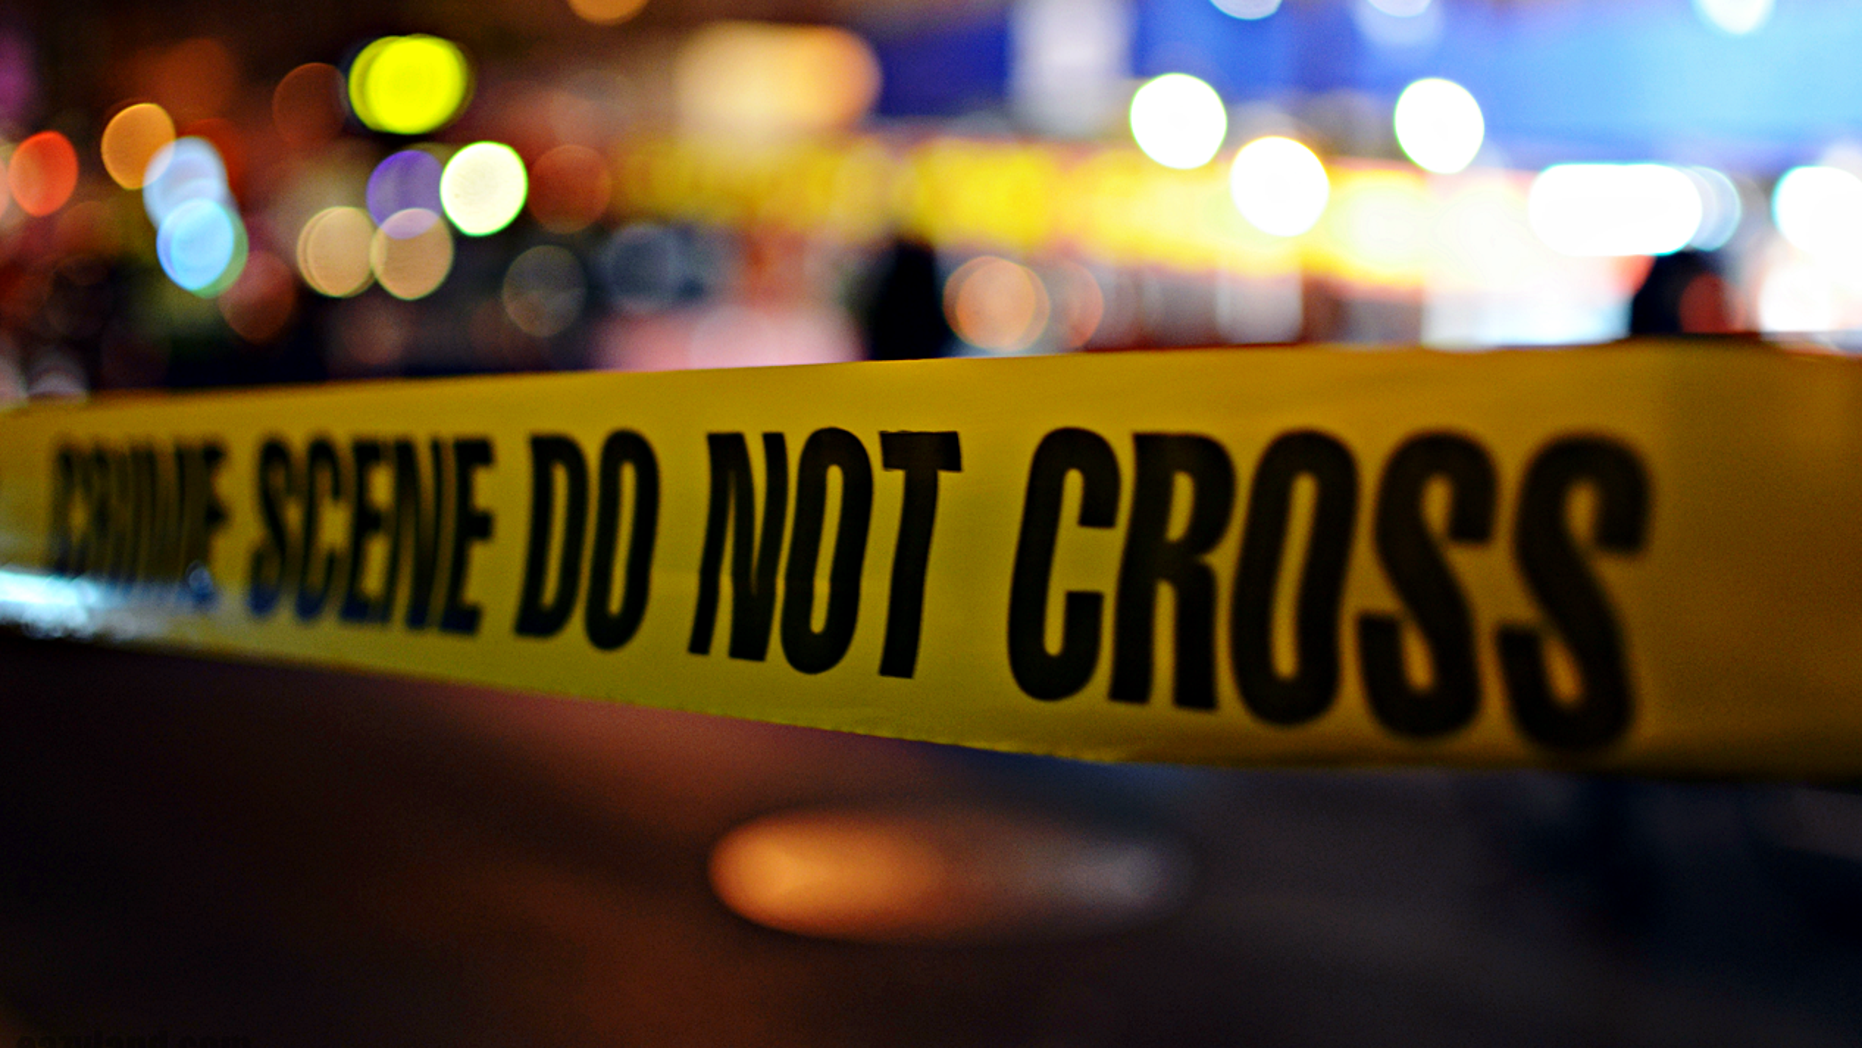 Dispute at IHOP restaurant in Alabama leads to 2 shooting deaths, 1 injury, police say